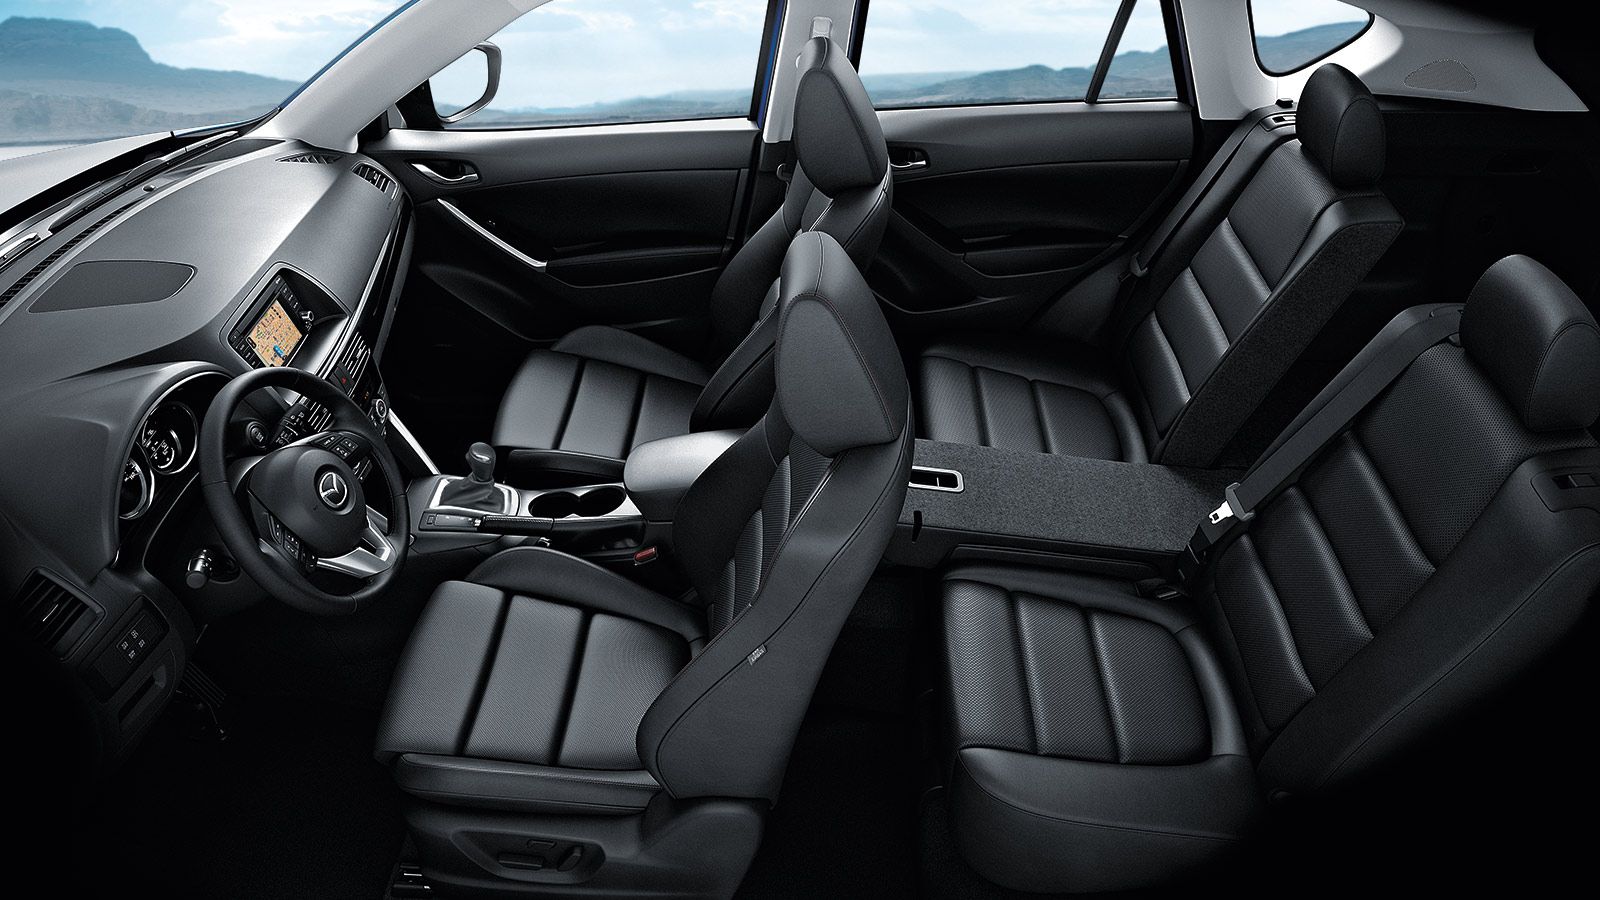 2015-Mazda-CX-5-interior-seats.jpg